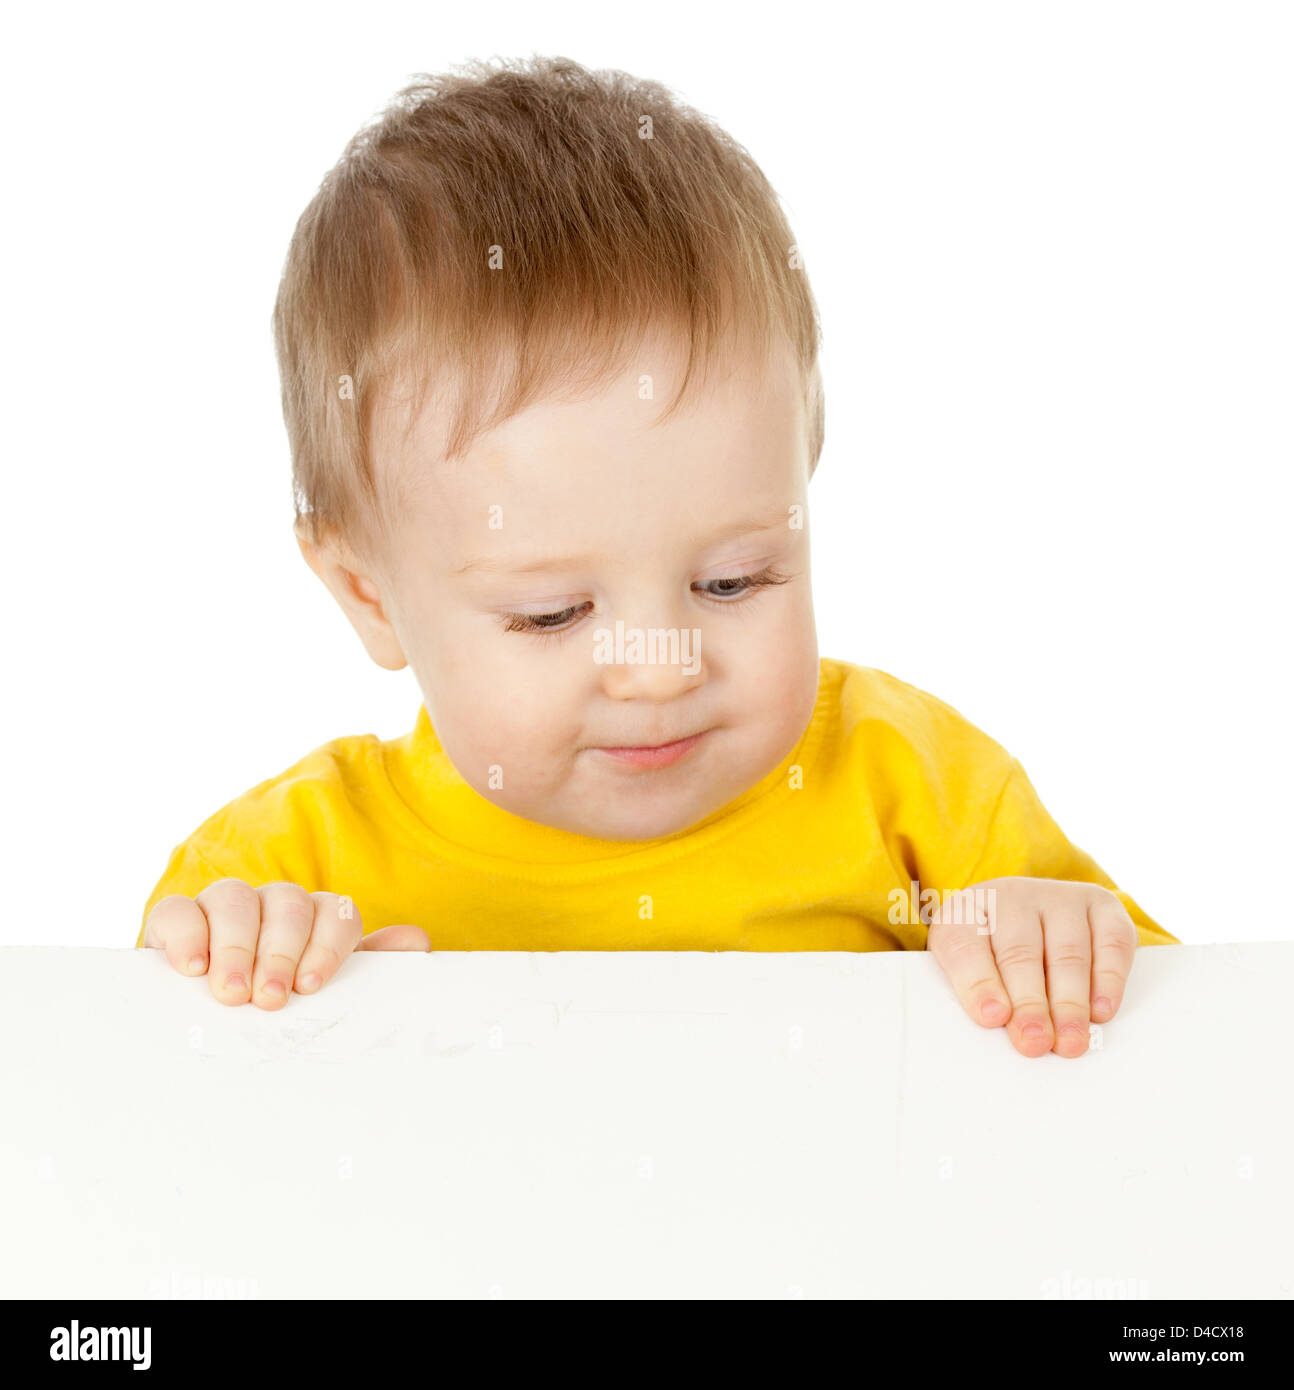 Adorabile bambino con vuoto banner pubblicitario Foto Stock